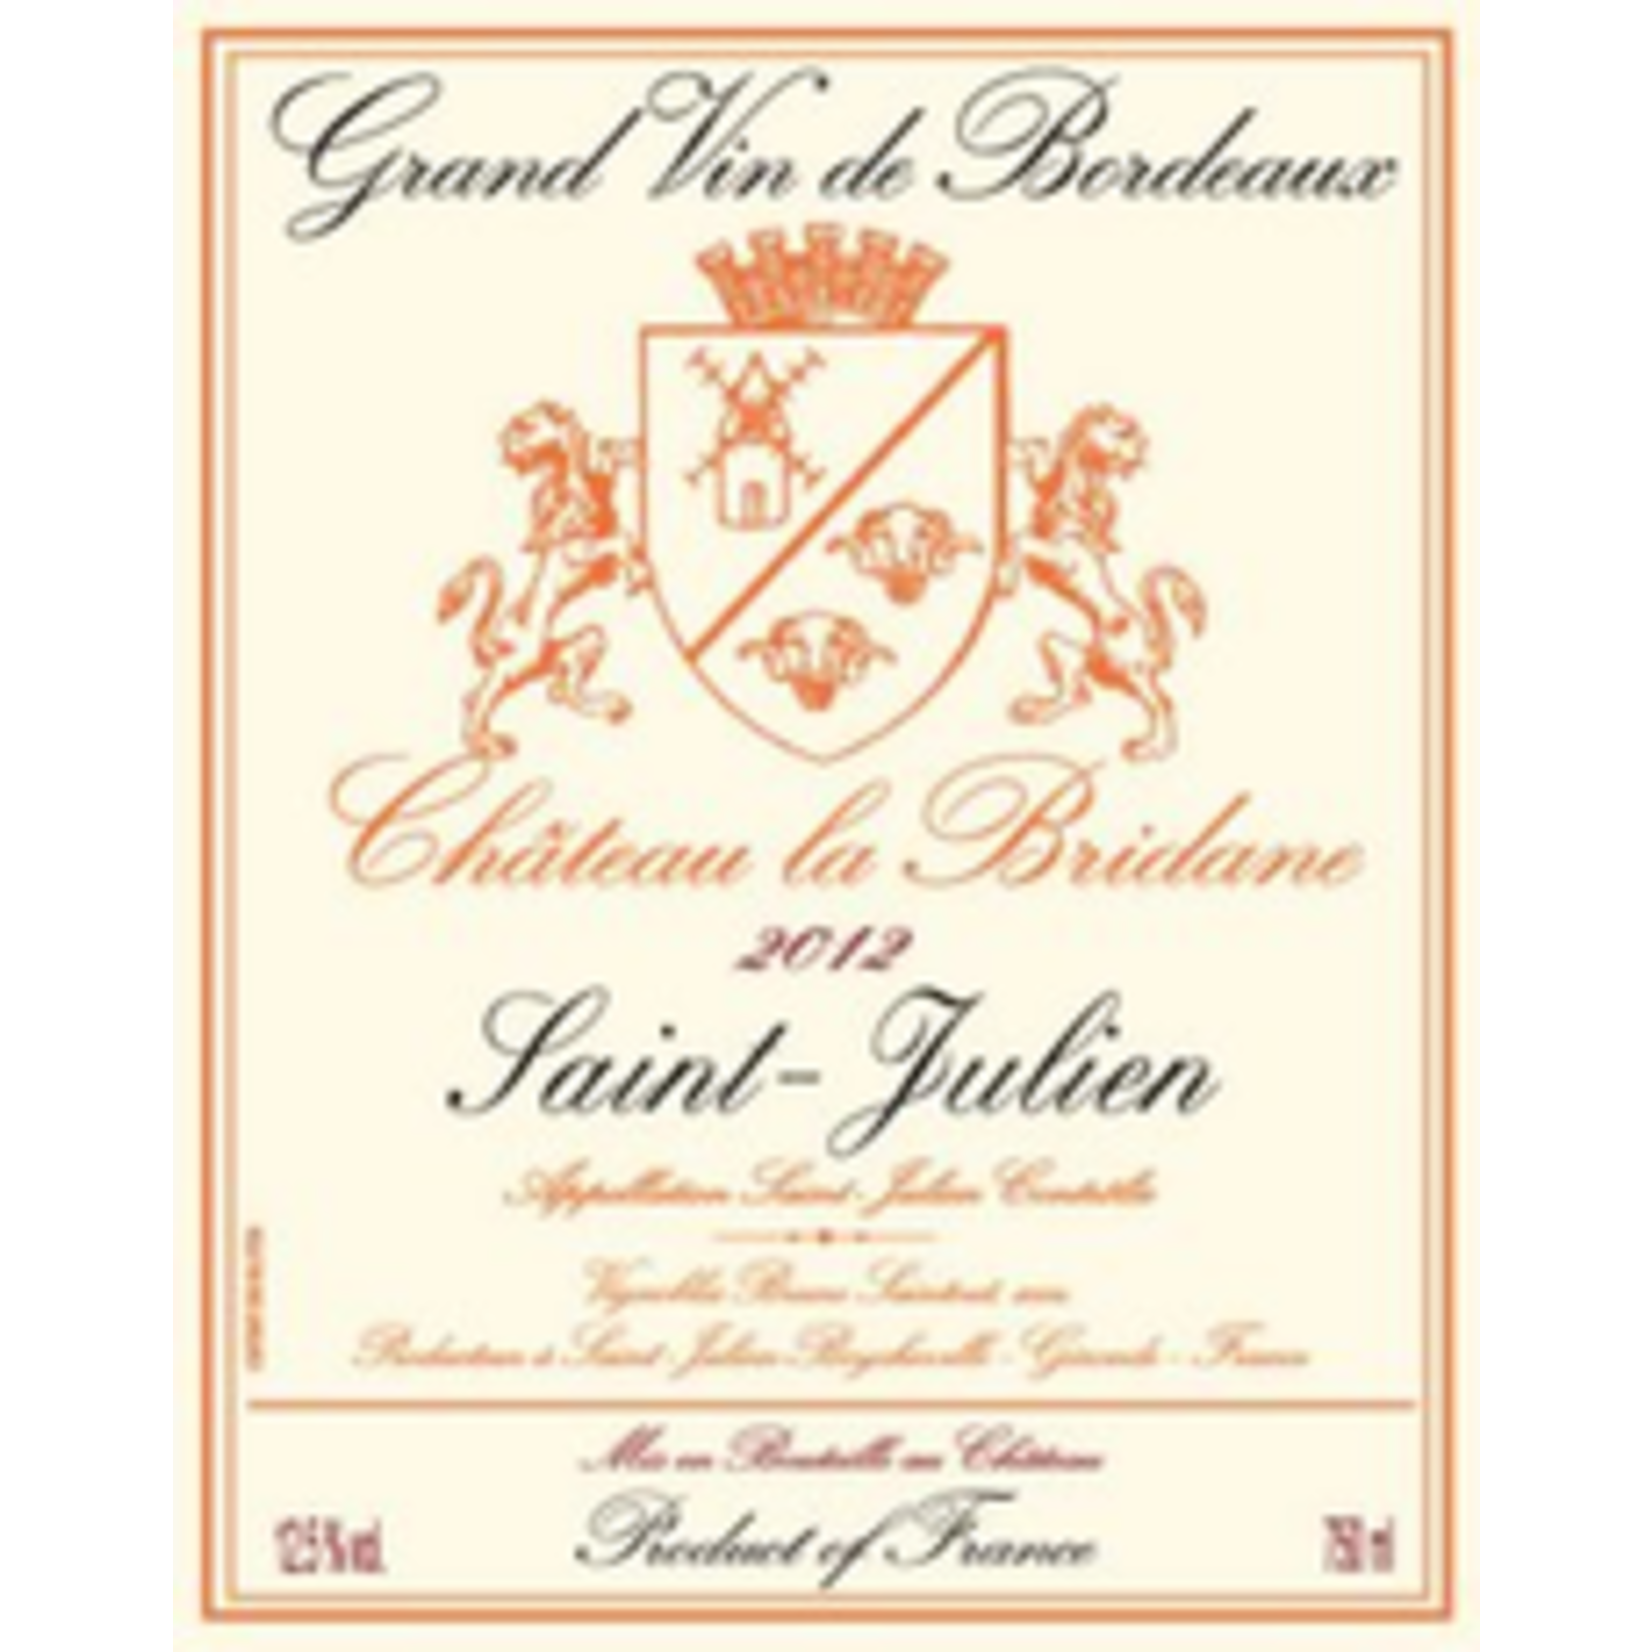 Wine Chateau La Bridane 2018